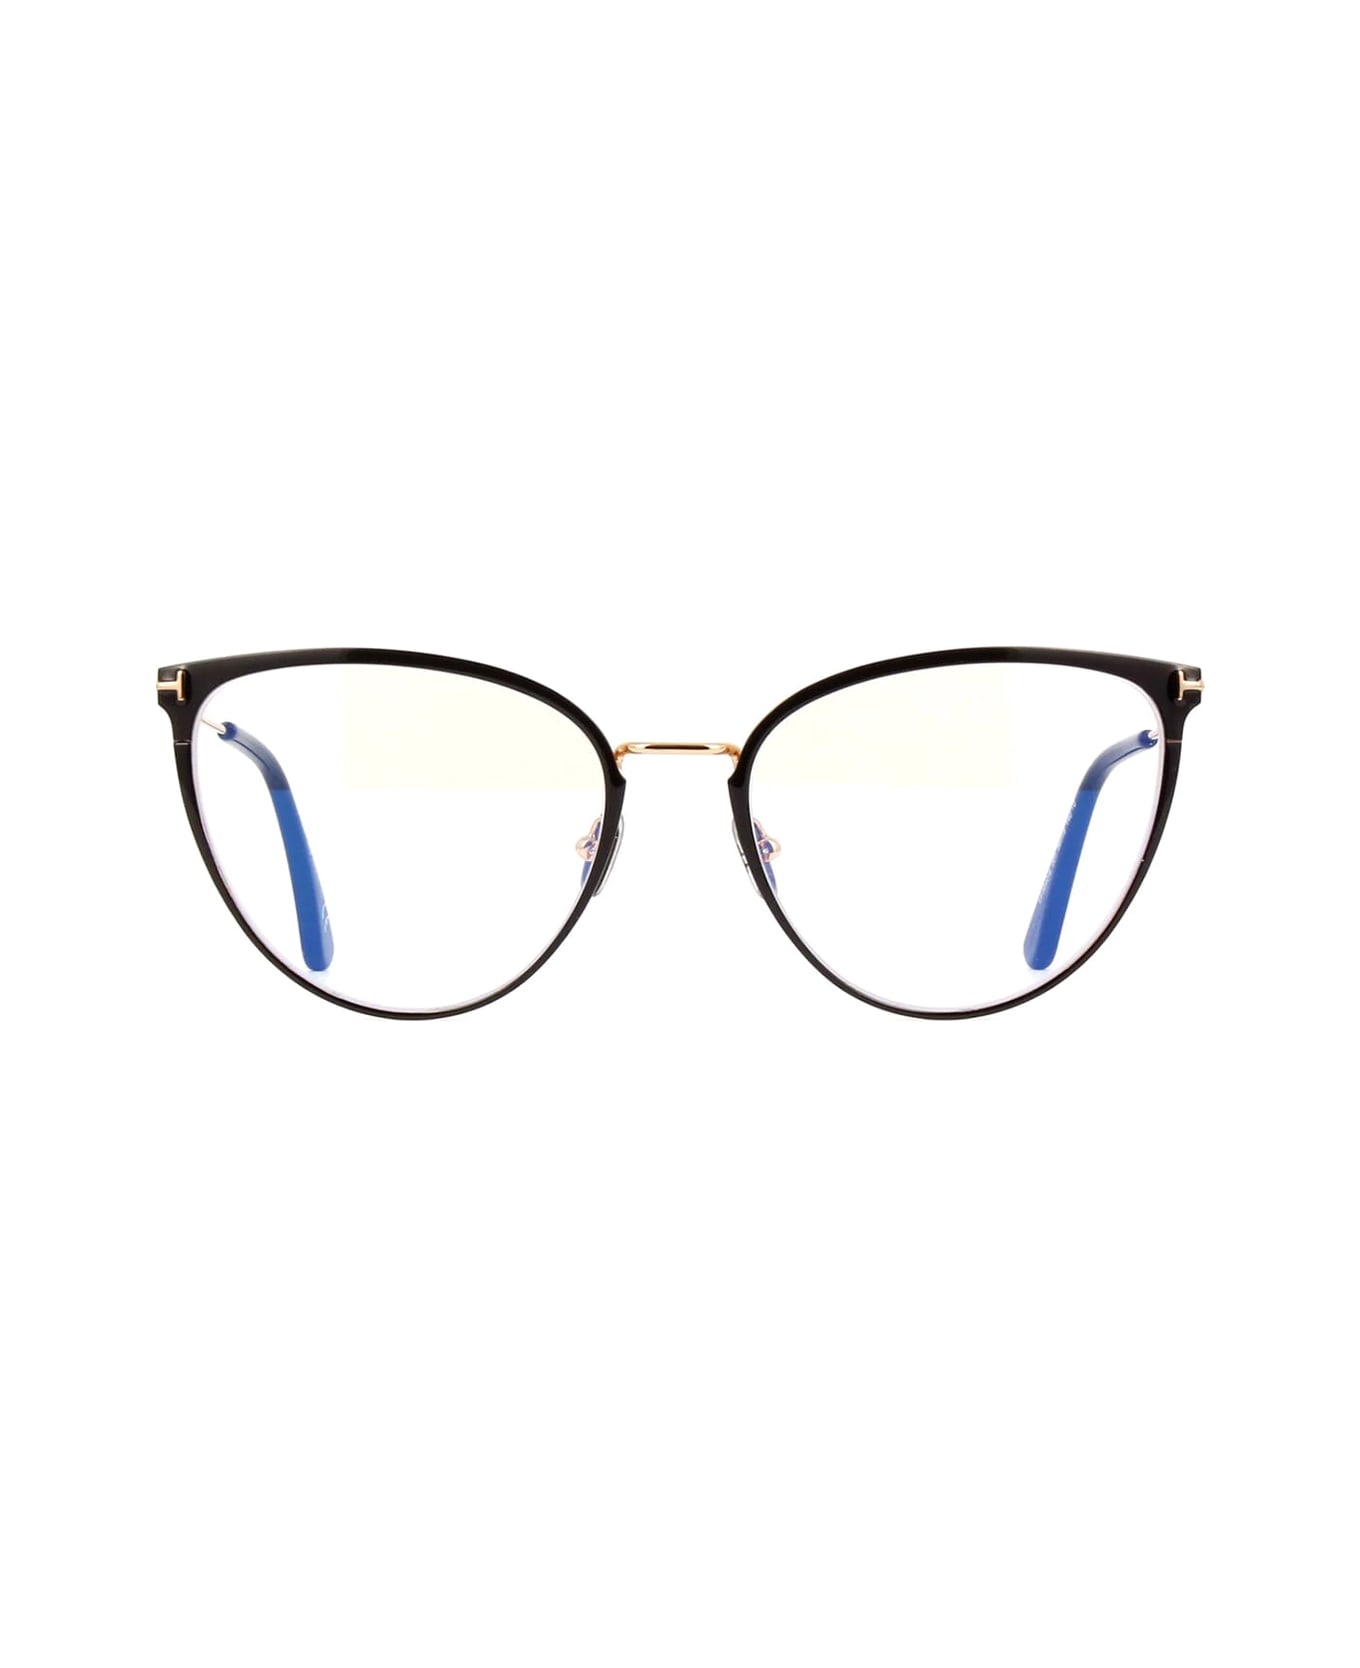 Tom Ford Eyewear Ft5840 001 Glasses - Nero